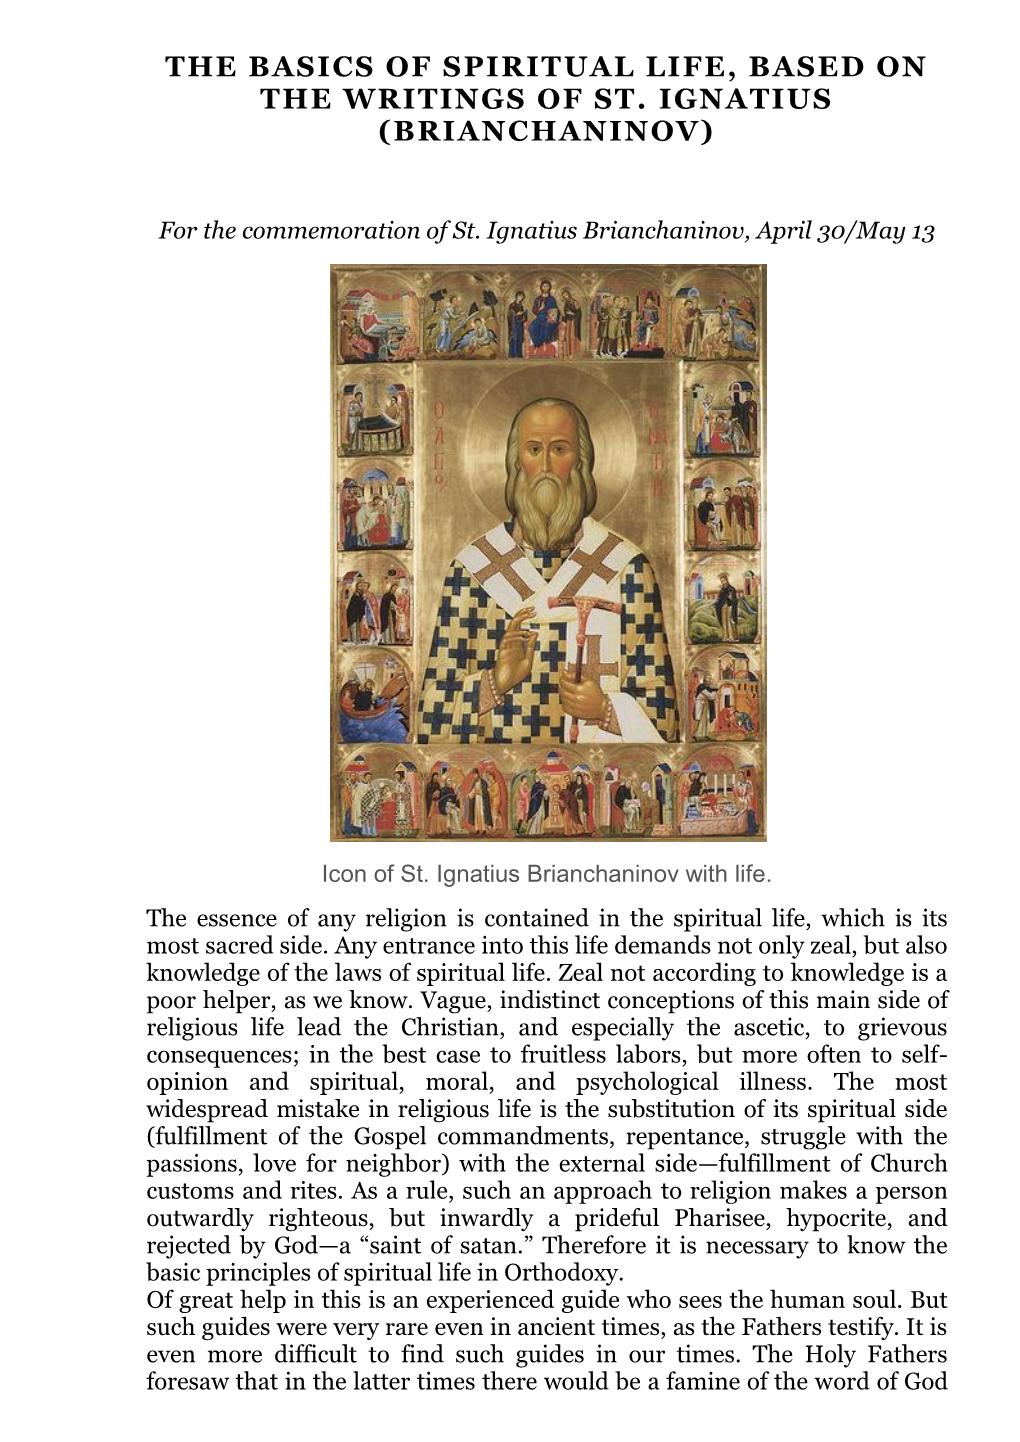 The Basics of Spiritual Life, Based on the Writings of St. Ignatius (Brianchaninov)